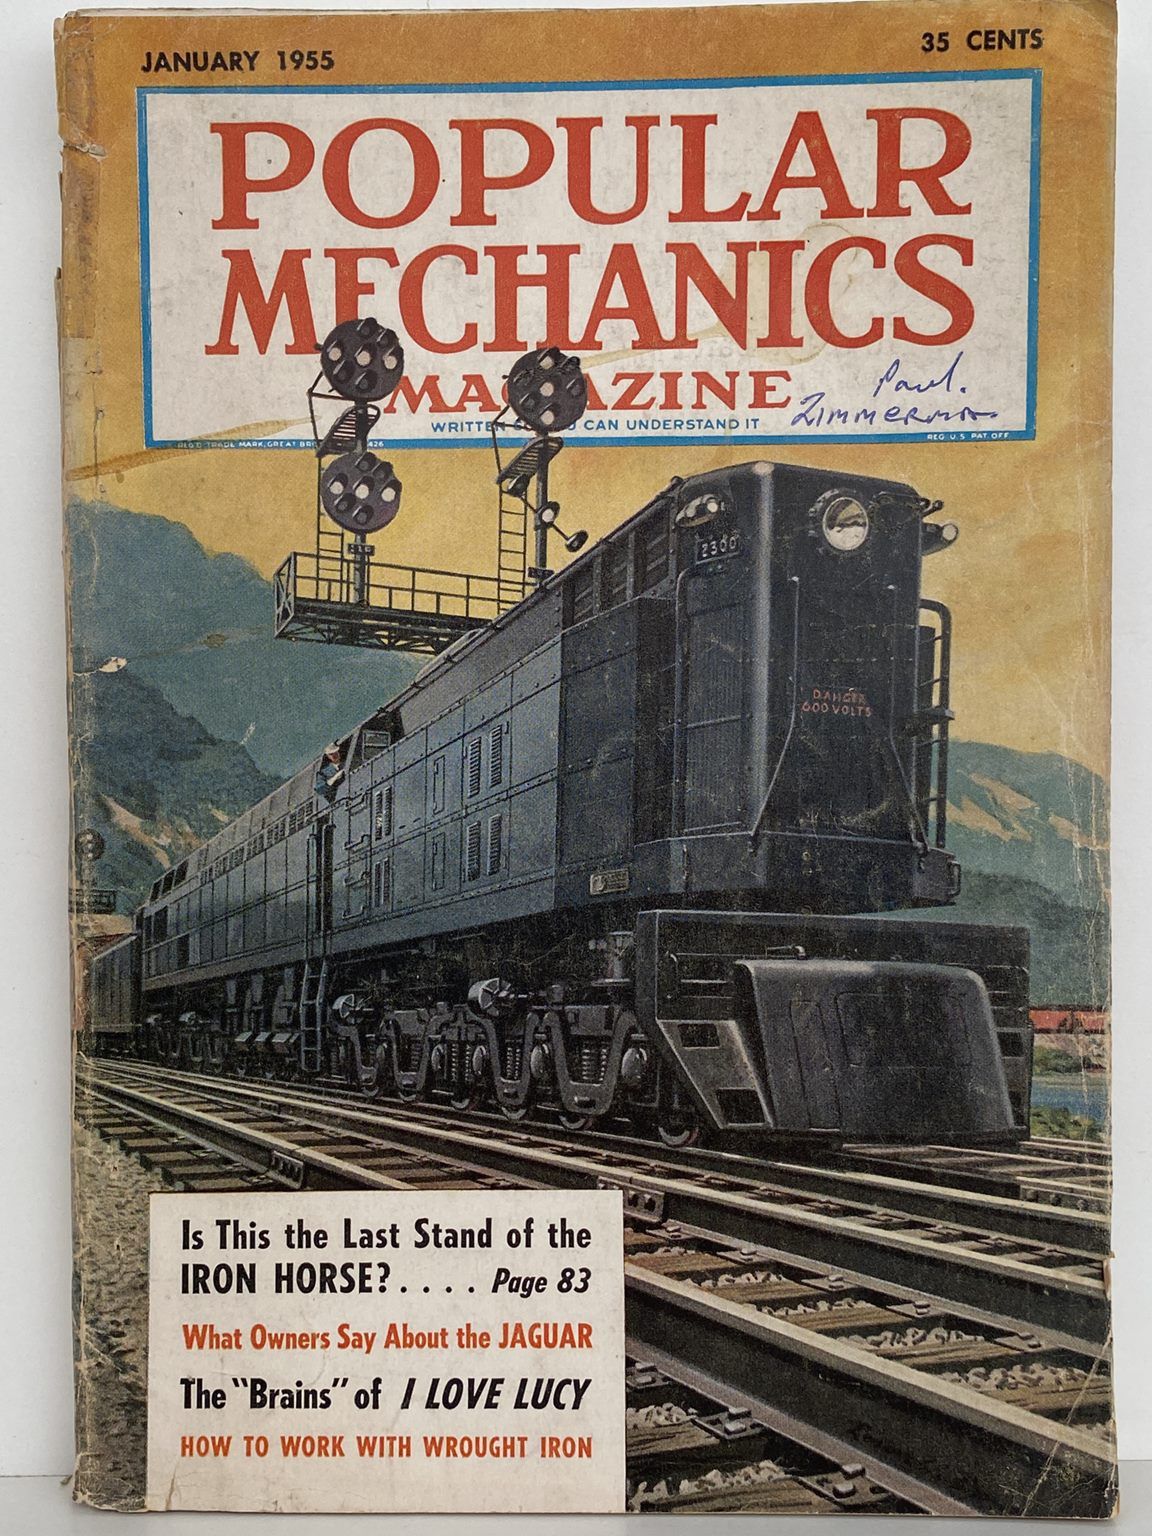 VINTAGE MAGAZINE: Popular Mechanics - Vol. 103, No. 1 - January 1955